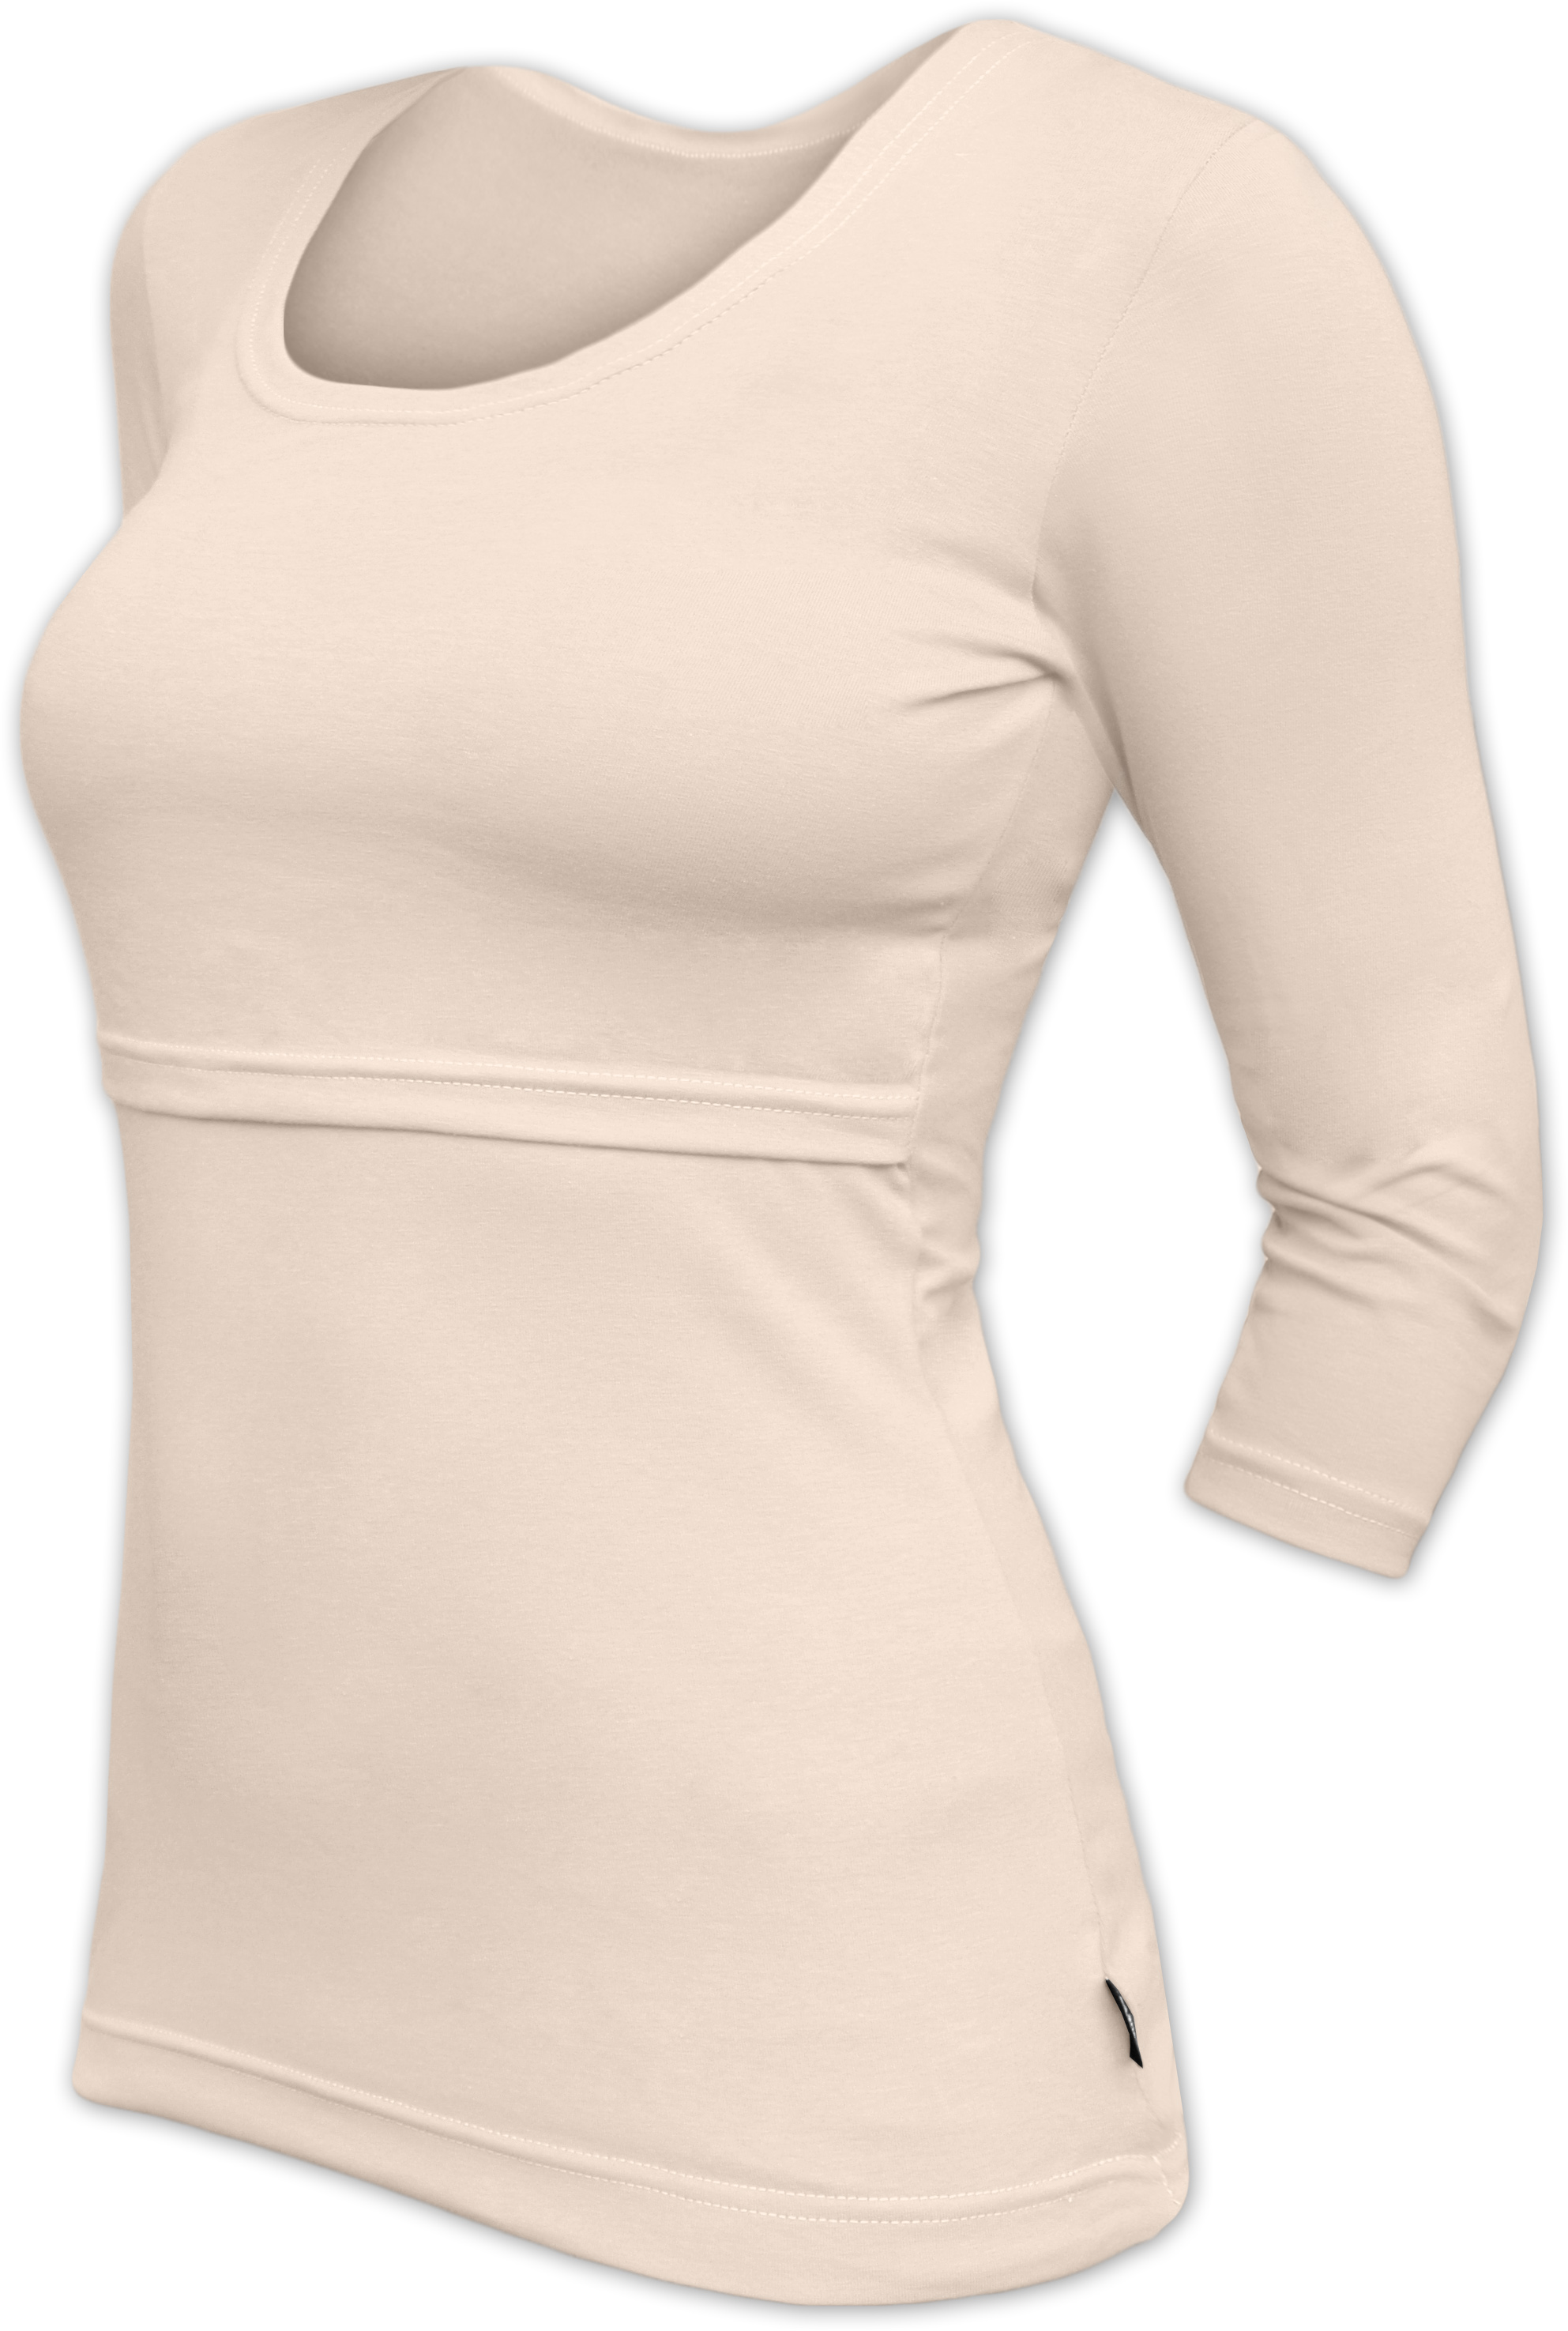 KATERINA- breast-feeding T-shirt 01, 3/4 sleeves, CAFFE LATTE S/M